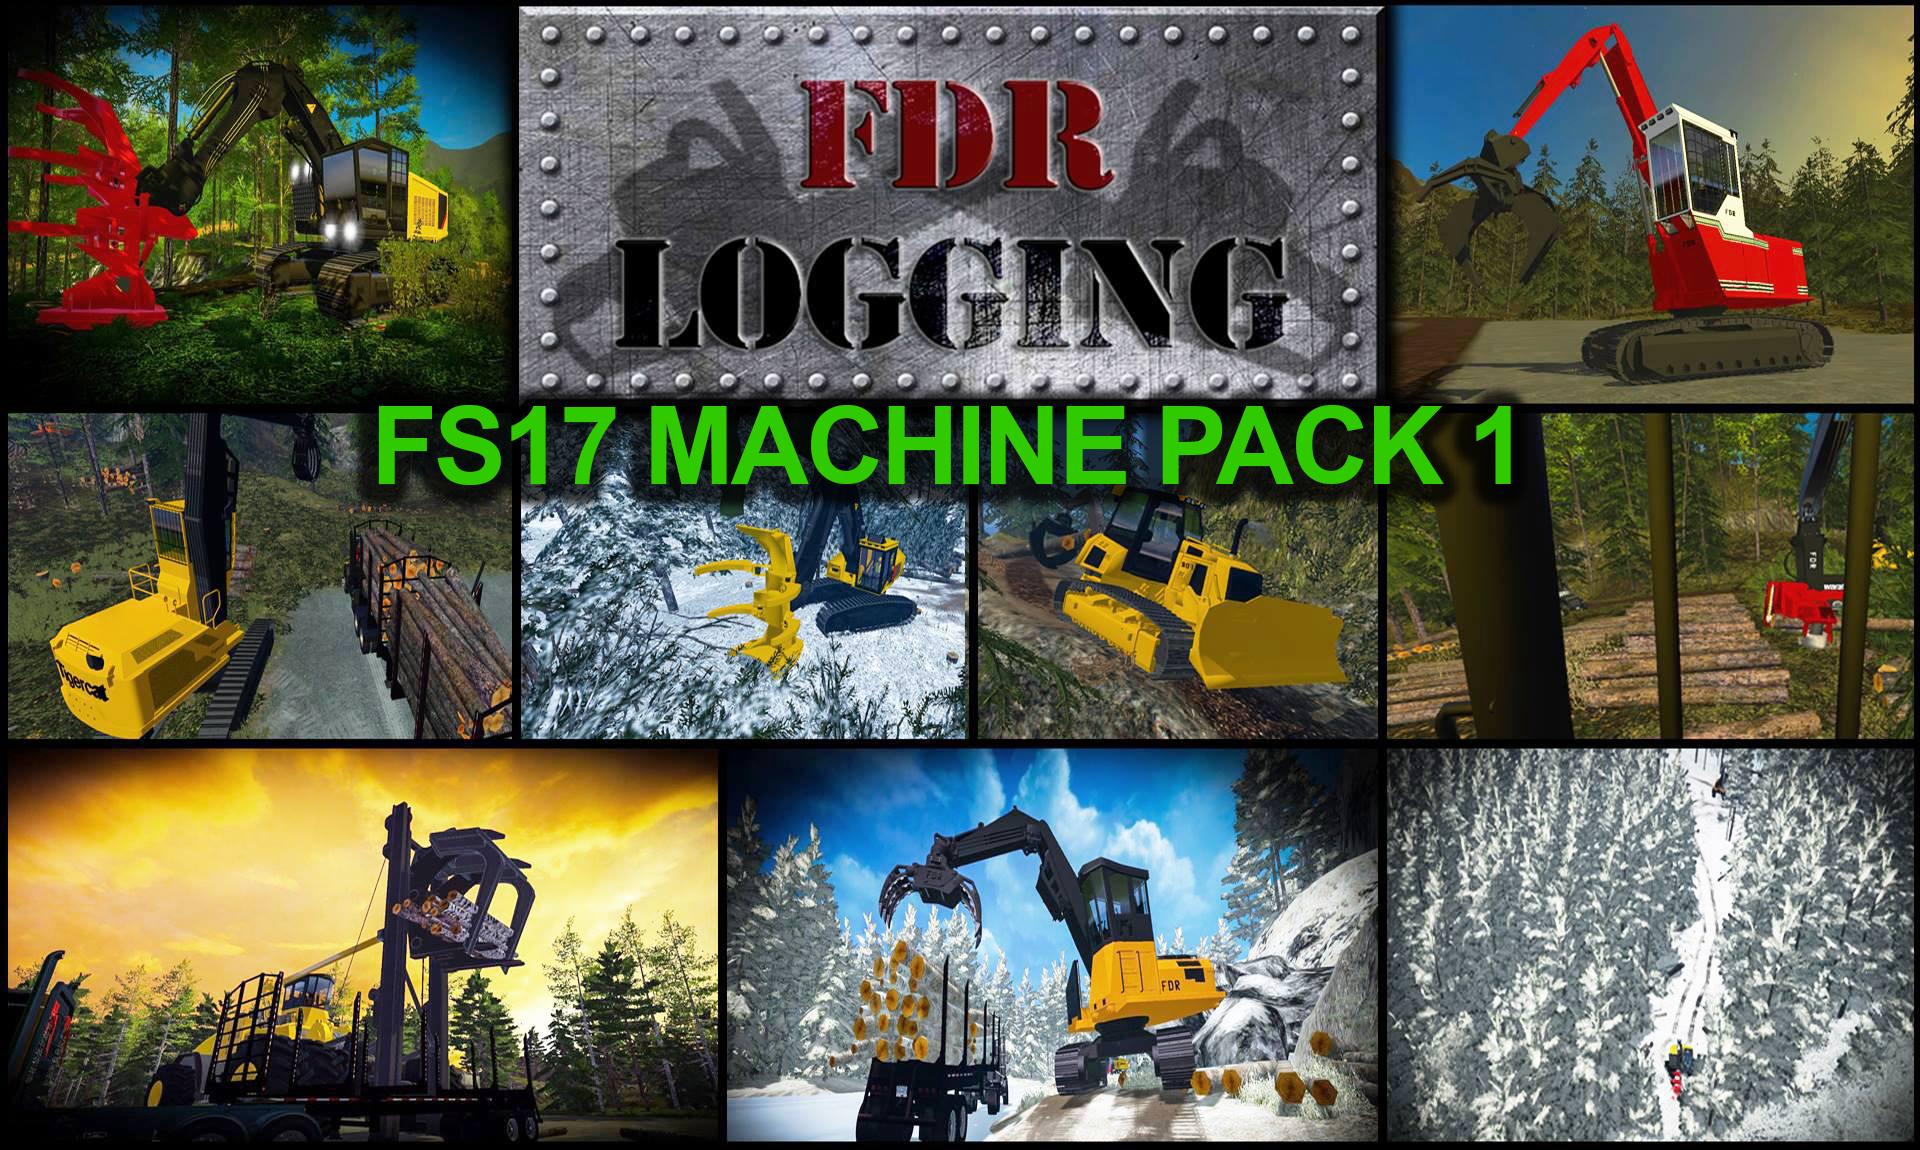 fdr-logging-fs17-machine-pack-1_1